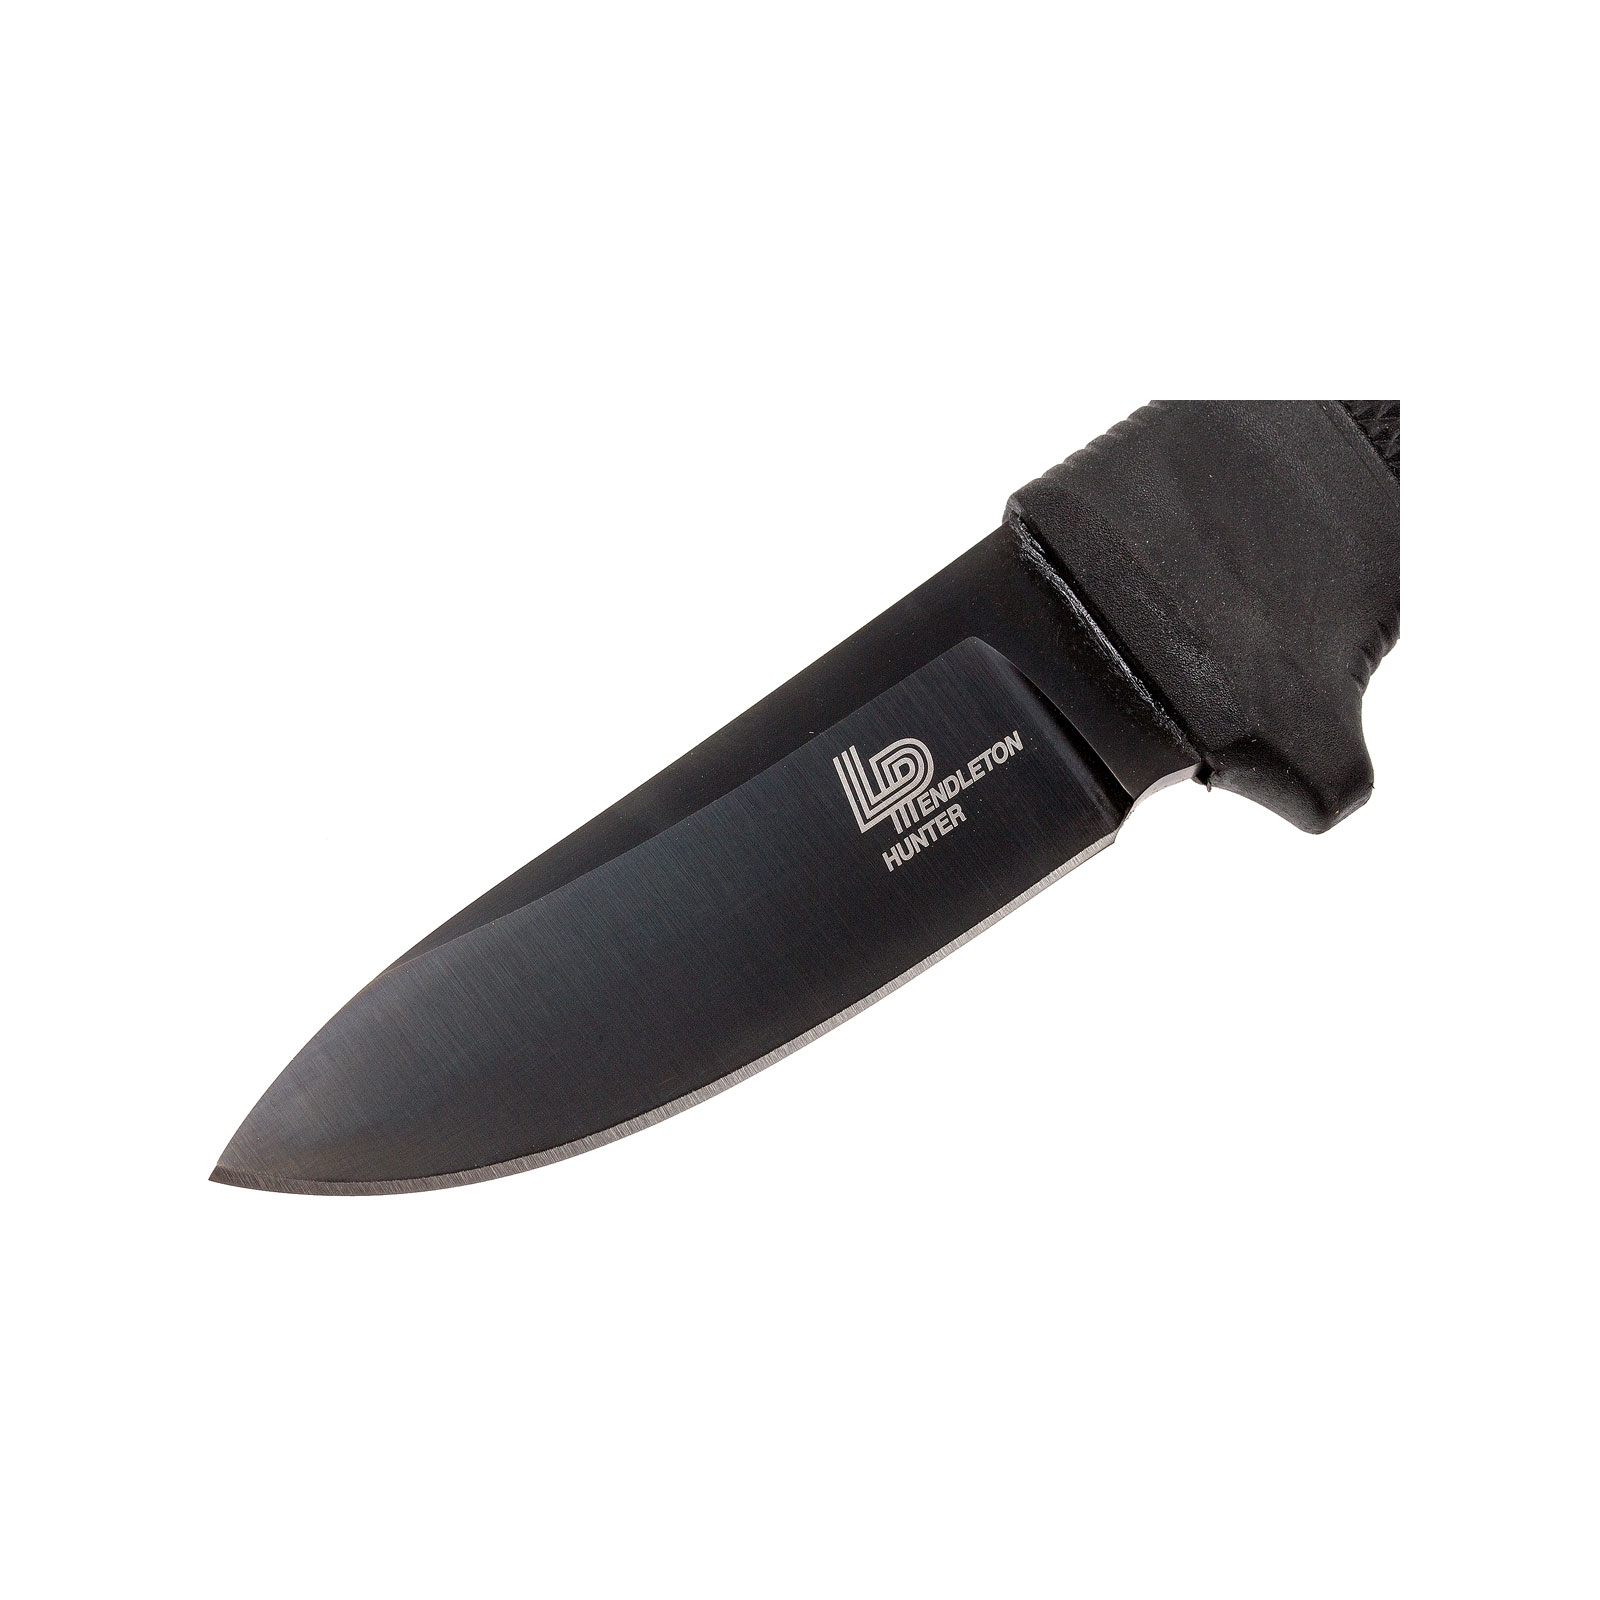 Нож Cold Steel Pendleton Hunter (36LPCSS) изображение 3